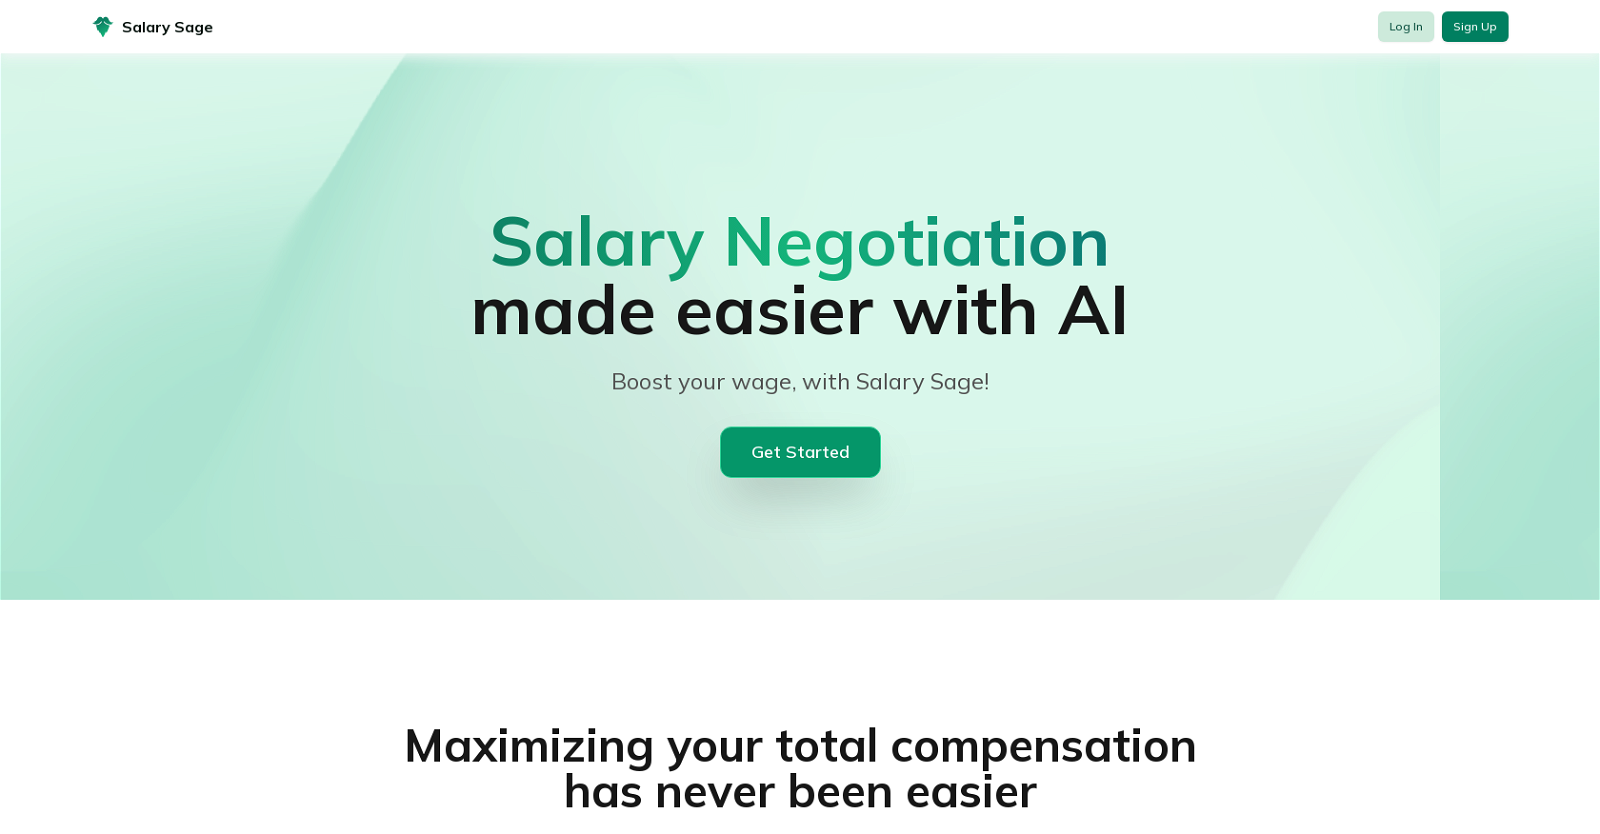 Salary Sage website